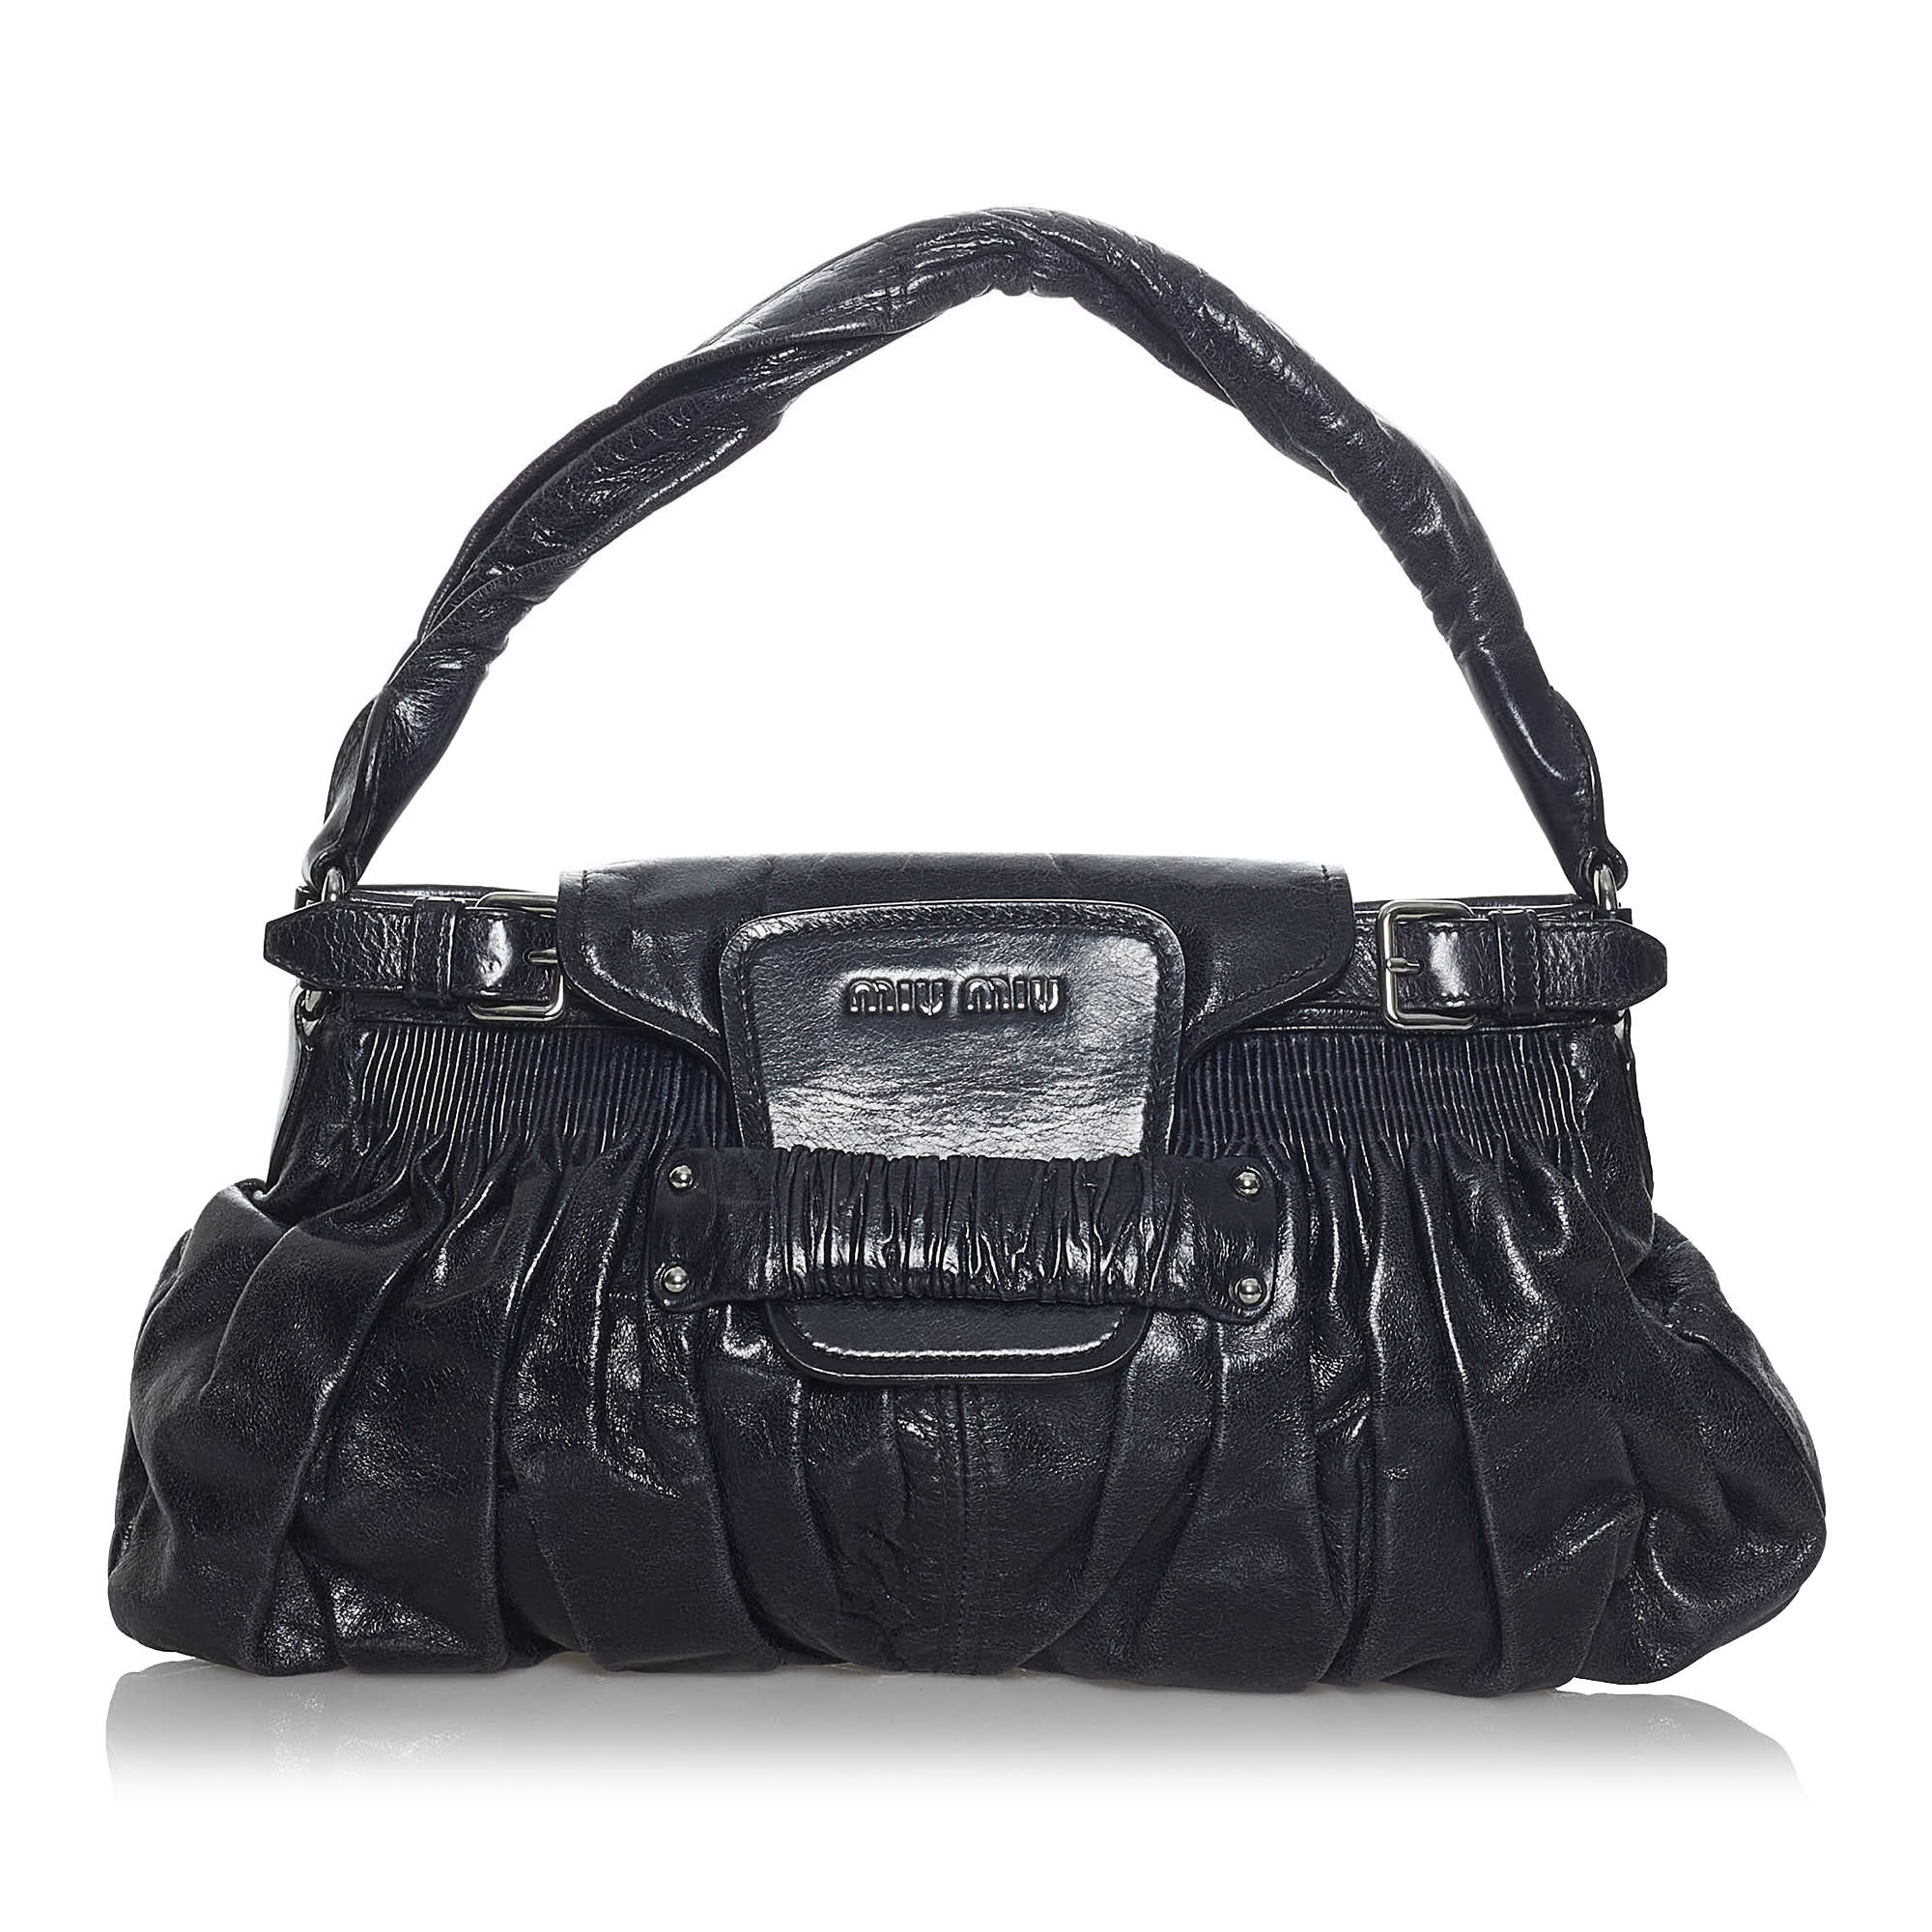 Miu Miu Leather Handbag, ONESIZE, black